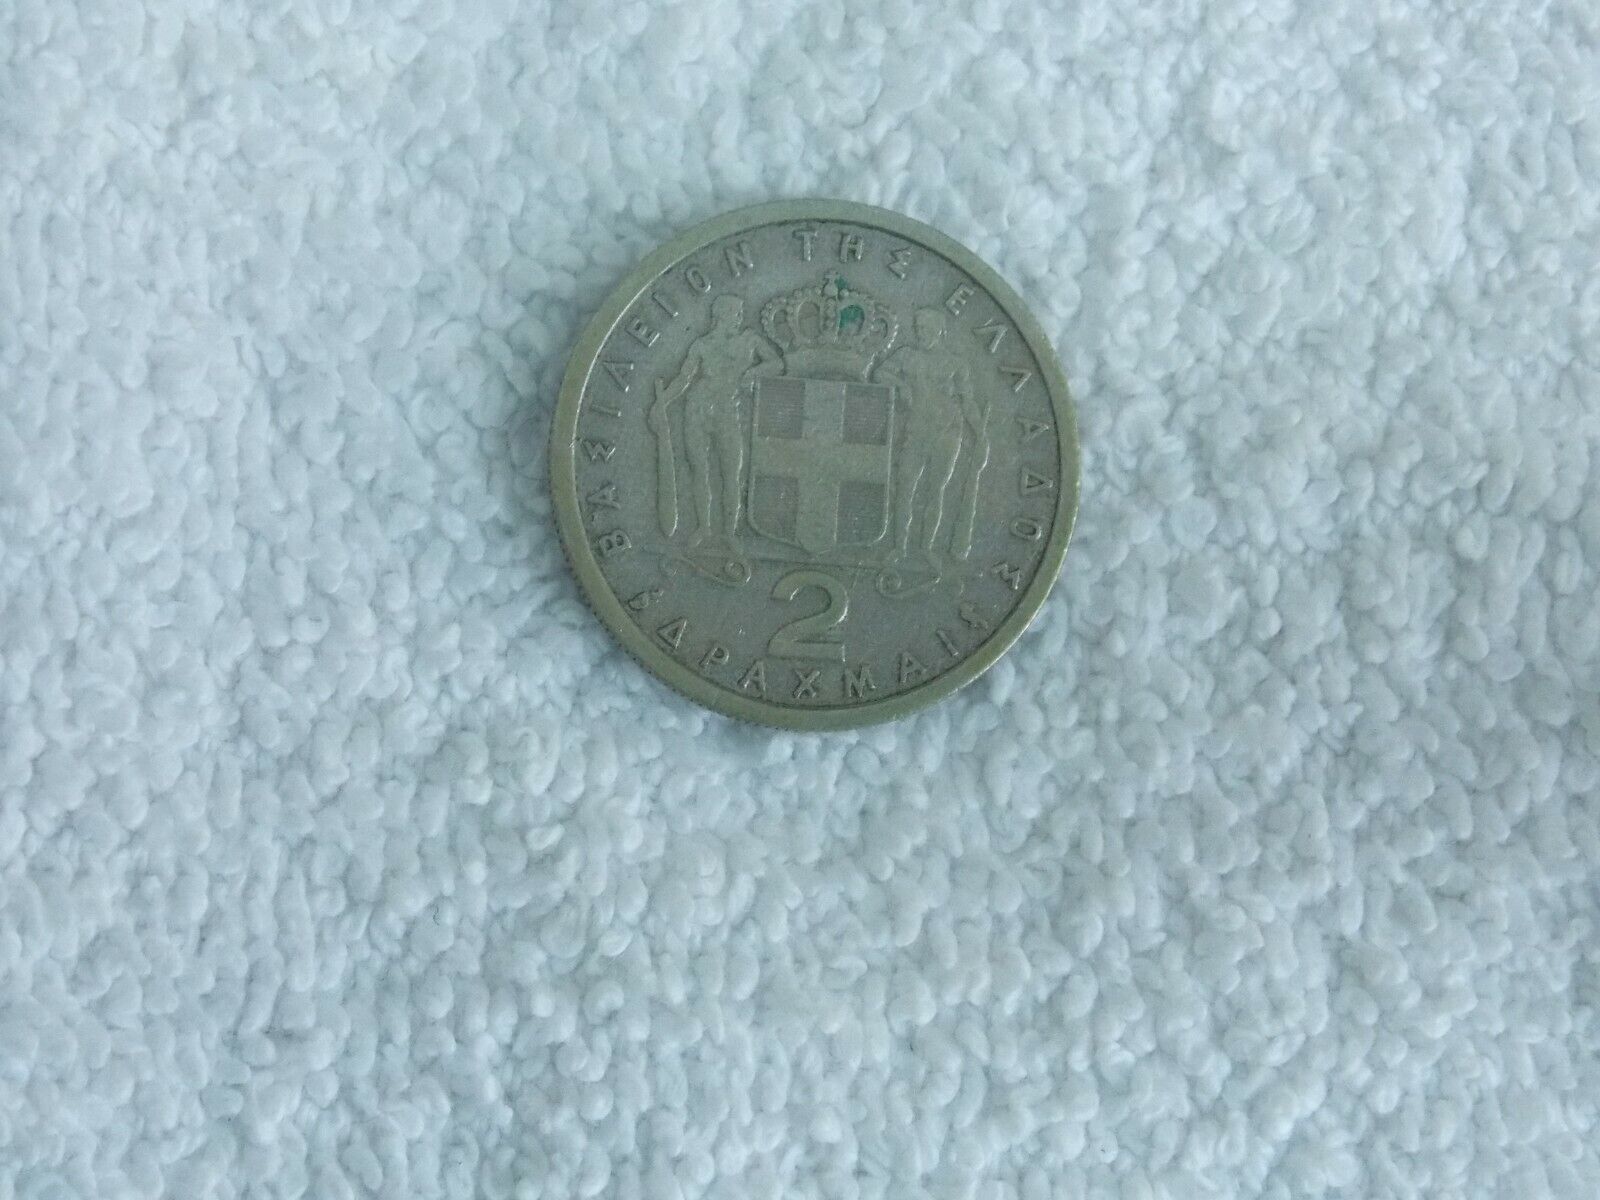 Greece minor coins Без бренда - фотография #4